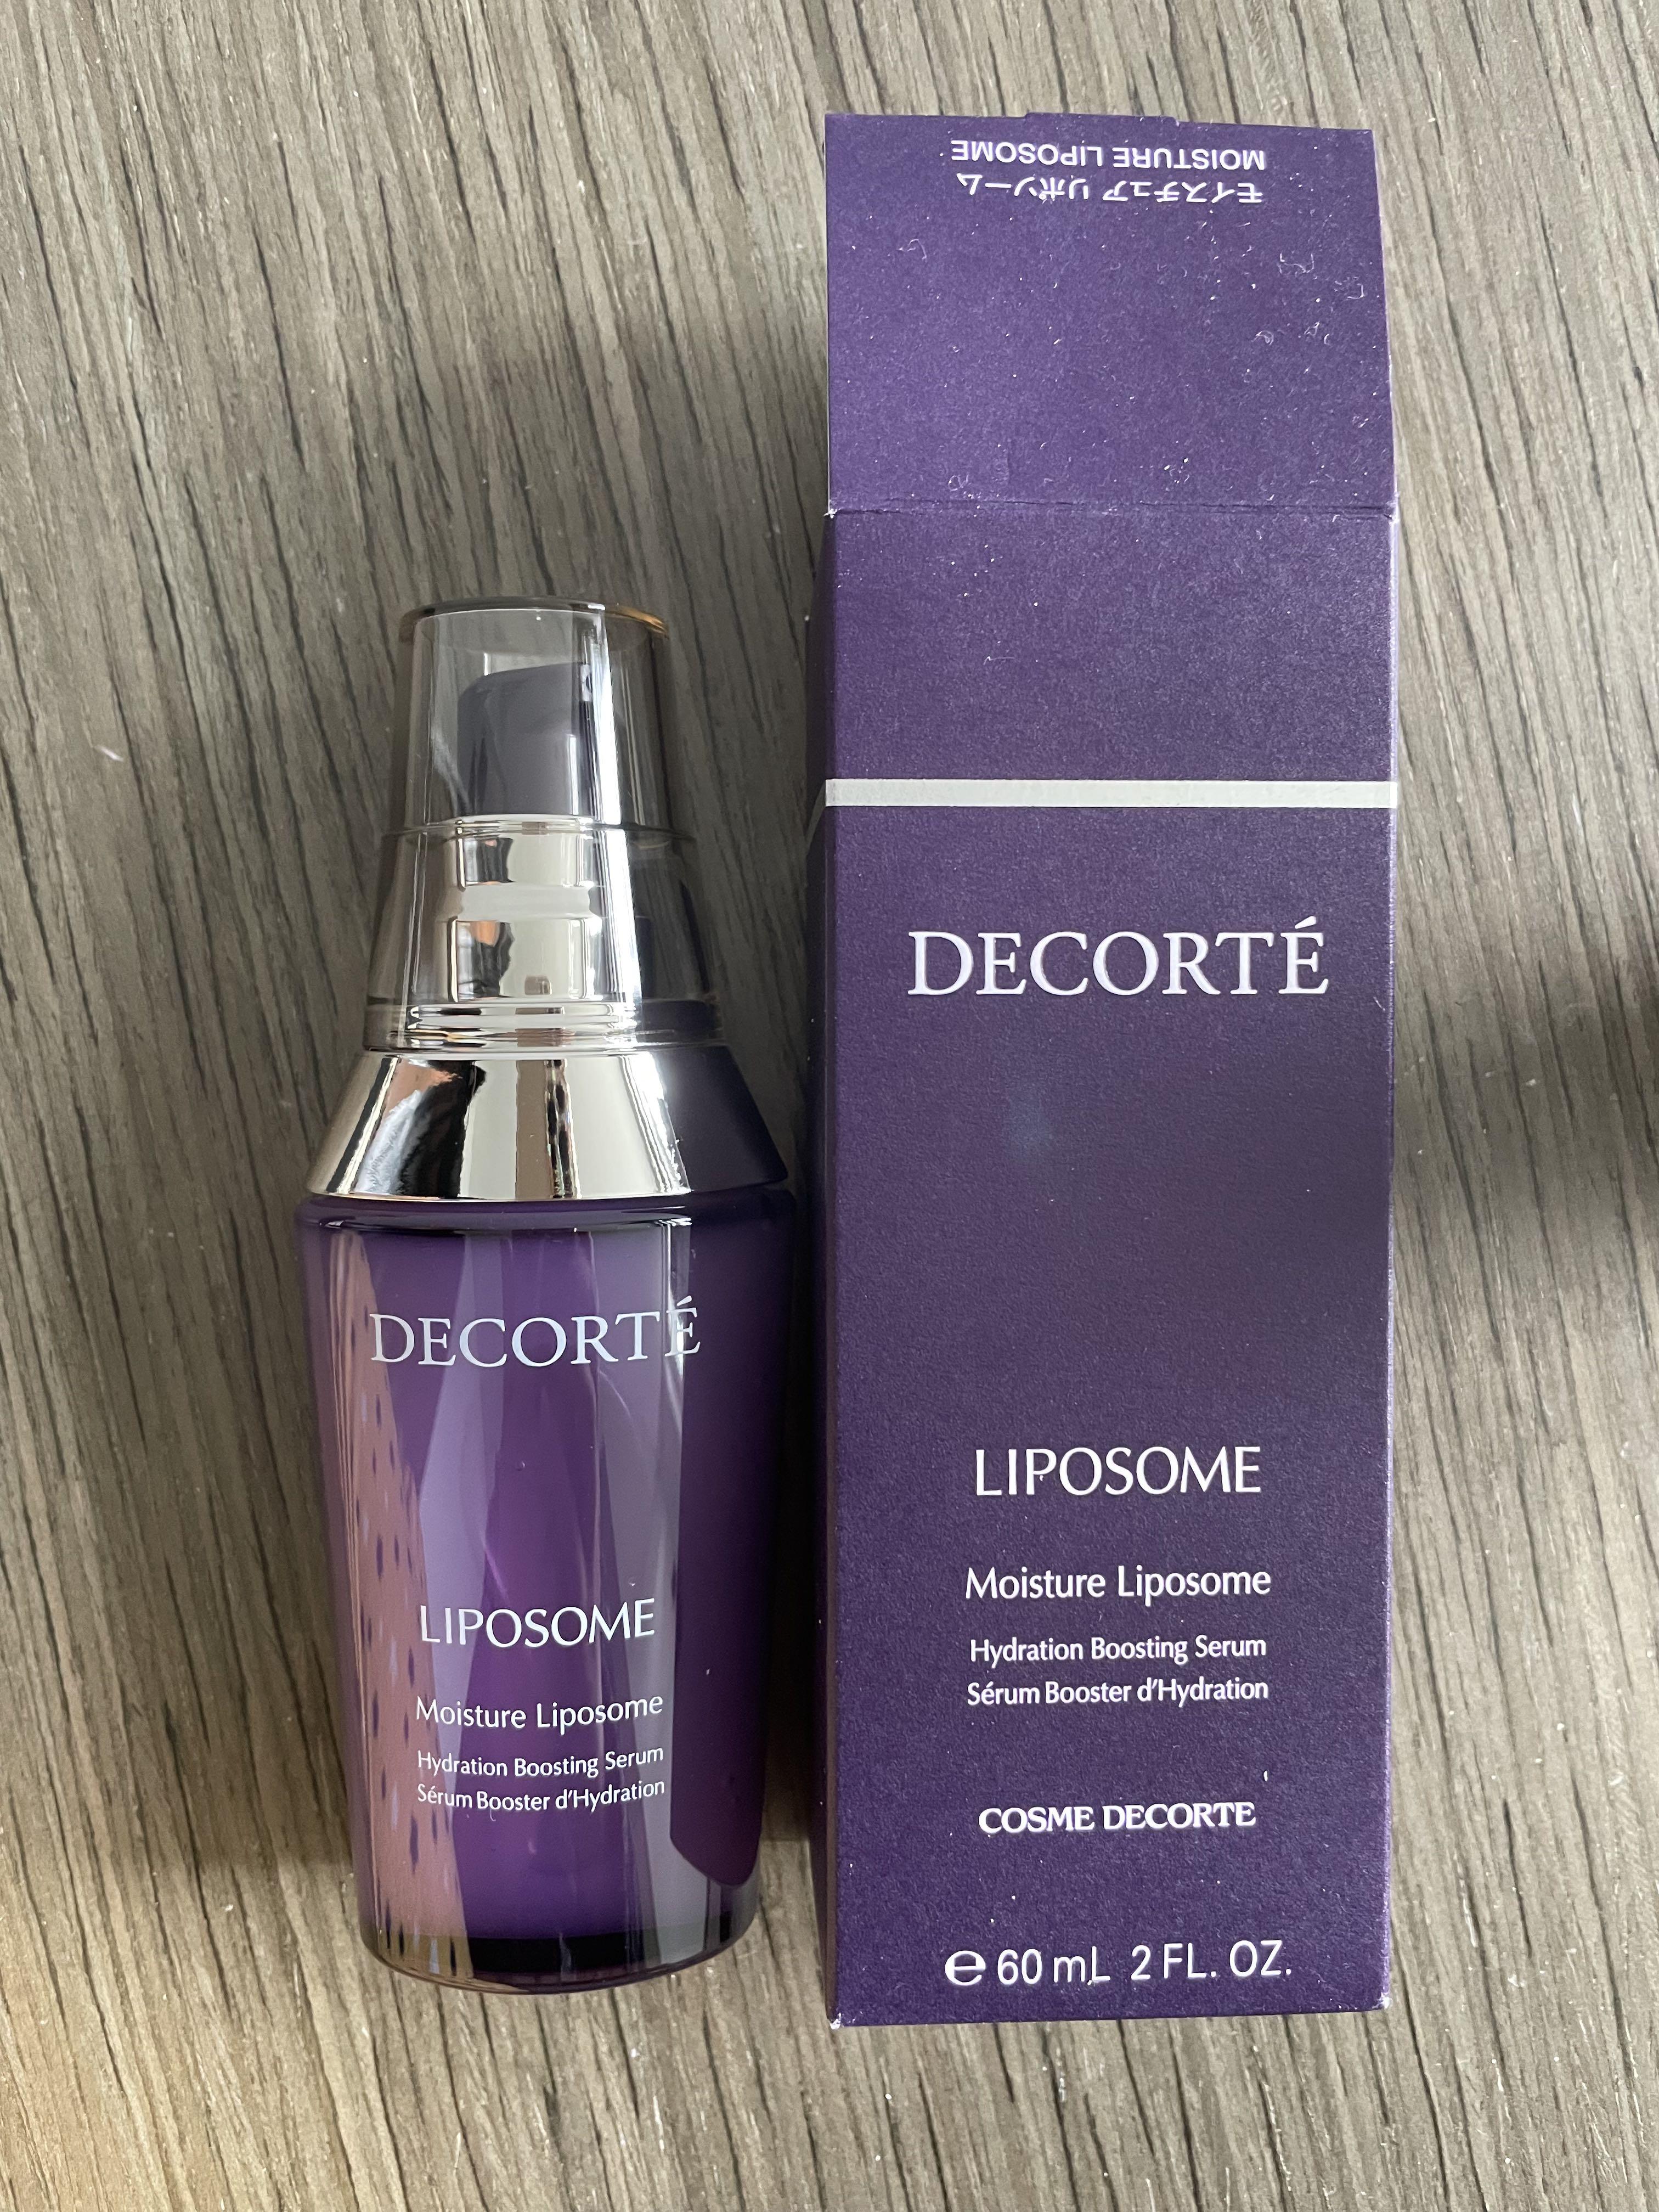 Decorte liposome 60ml, 美容＆化妝品, 健康及美容- 皮膚護理, 面部